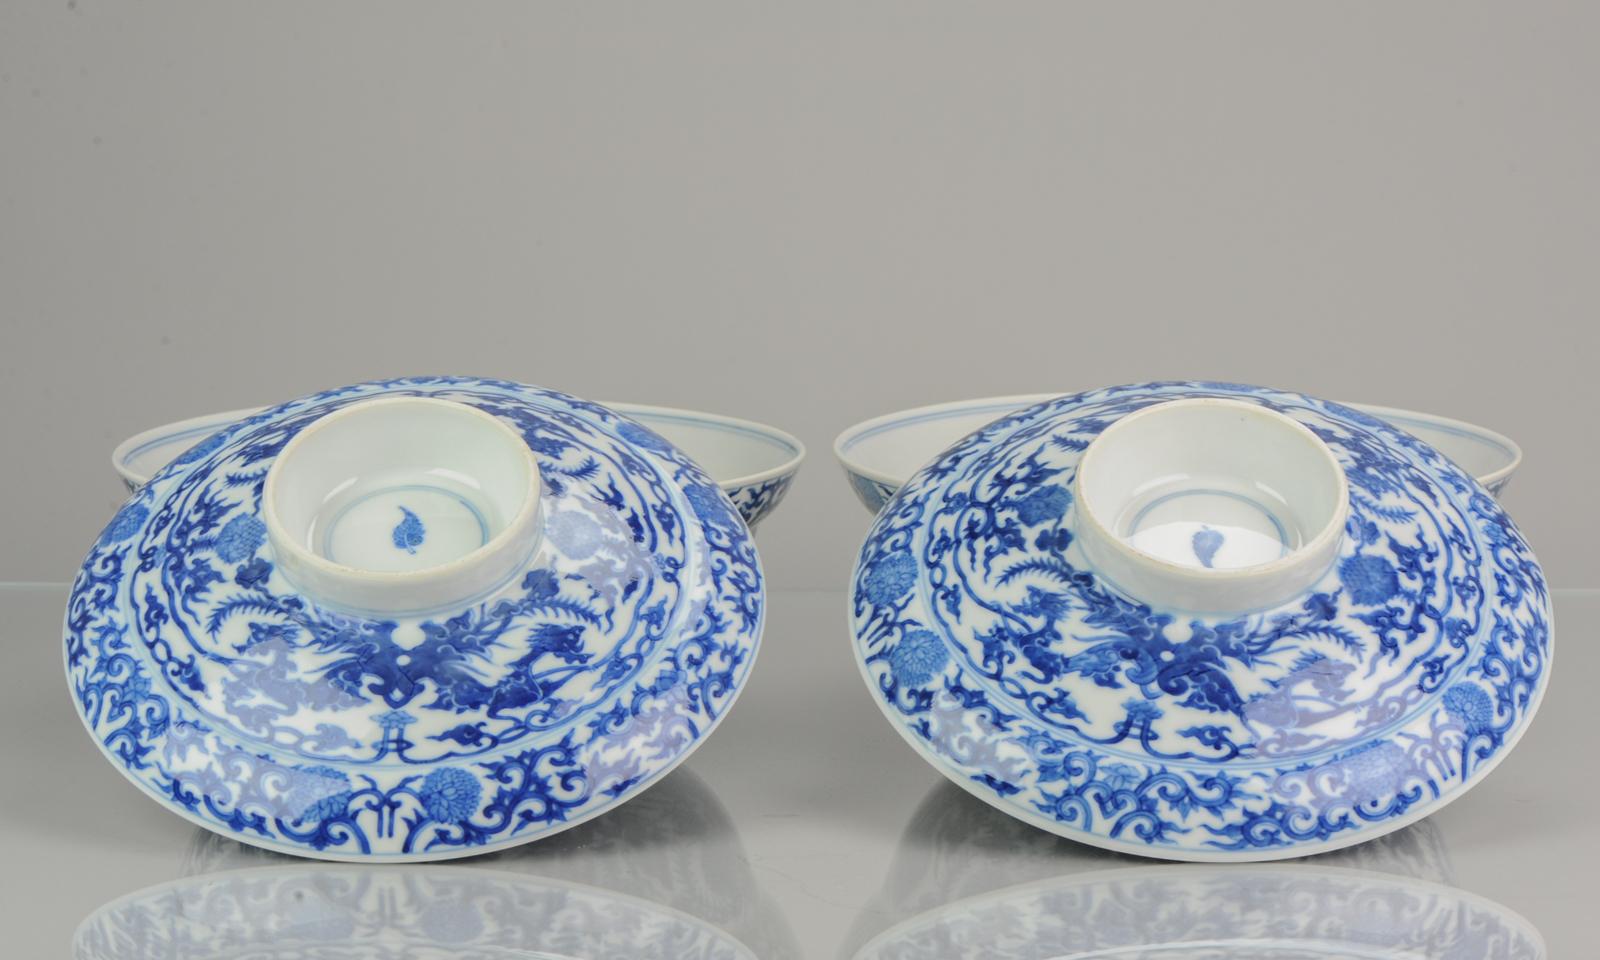 Antique 19th Century Guangxu Period Chinese Porcelain Bowls SE Asian Market For Sale 12